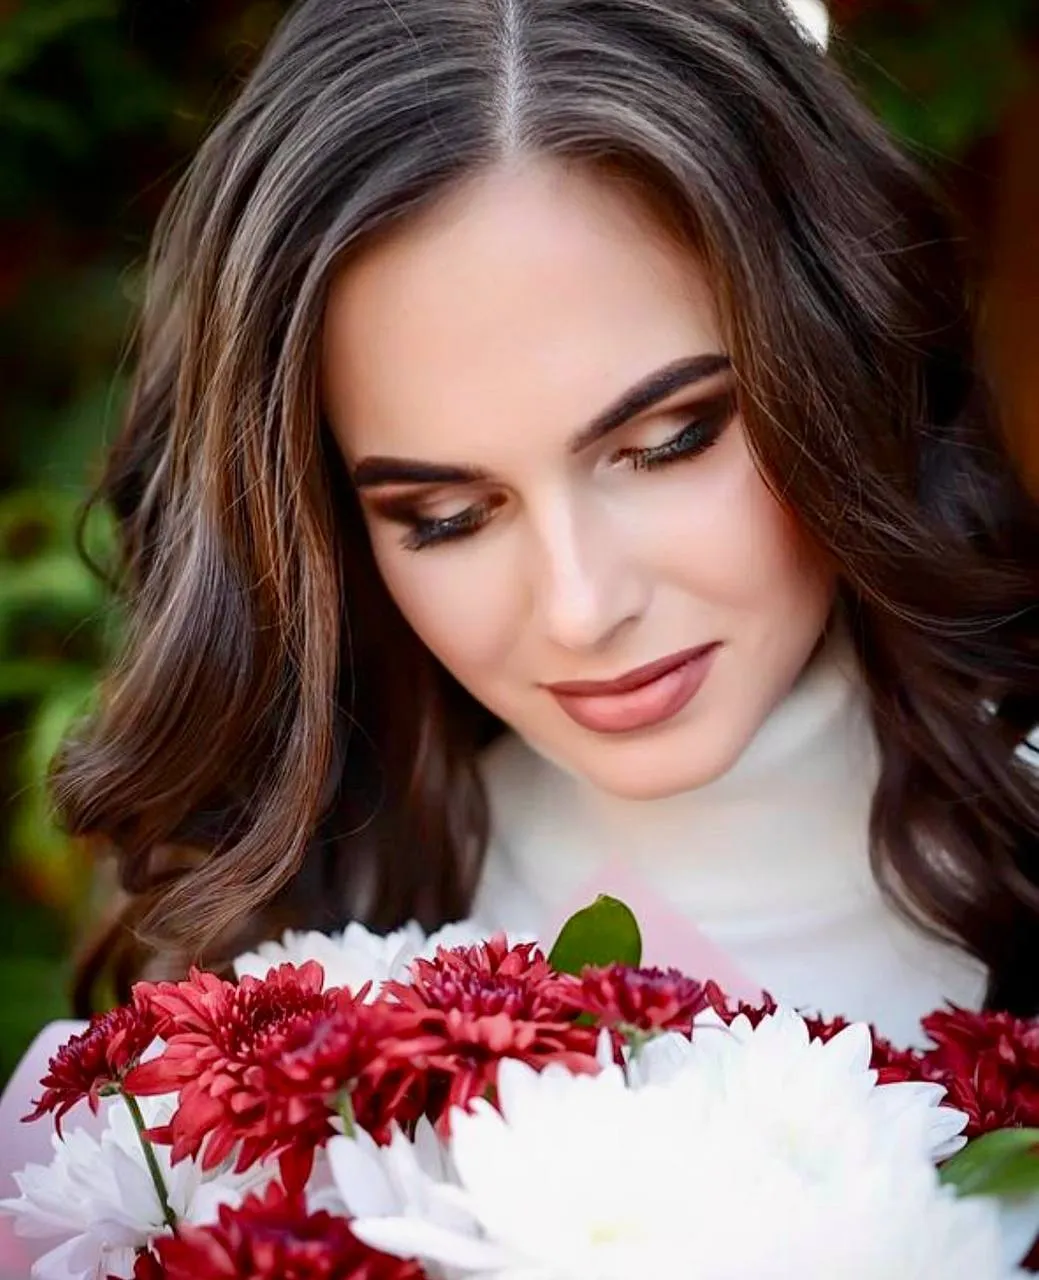 Anna ukrainian brides uk